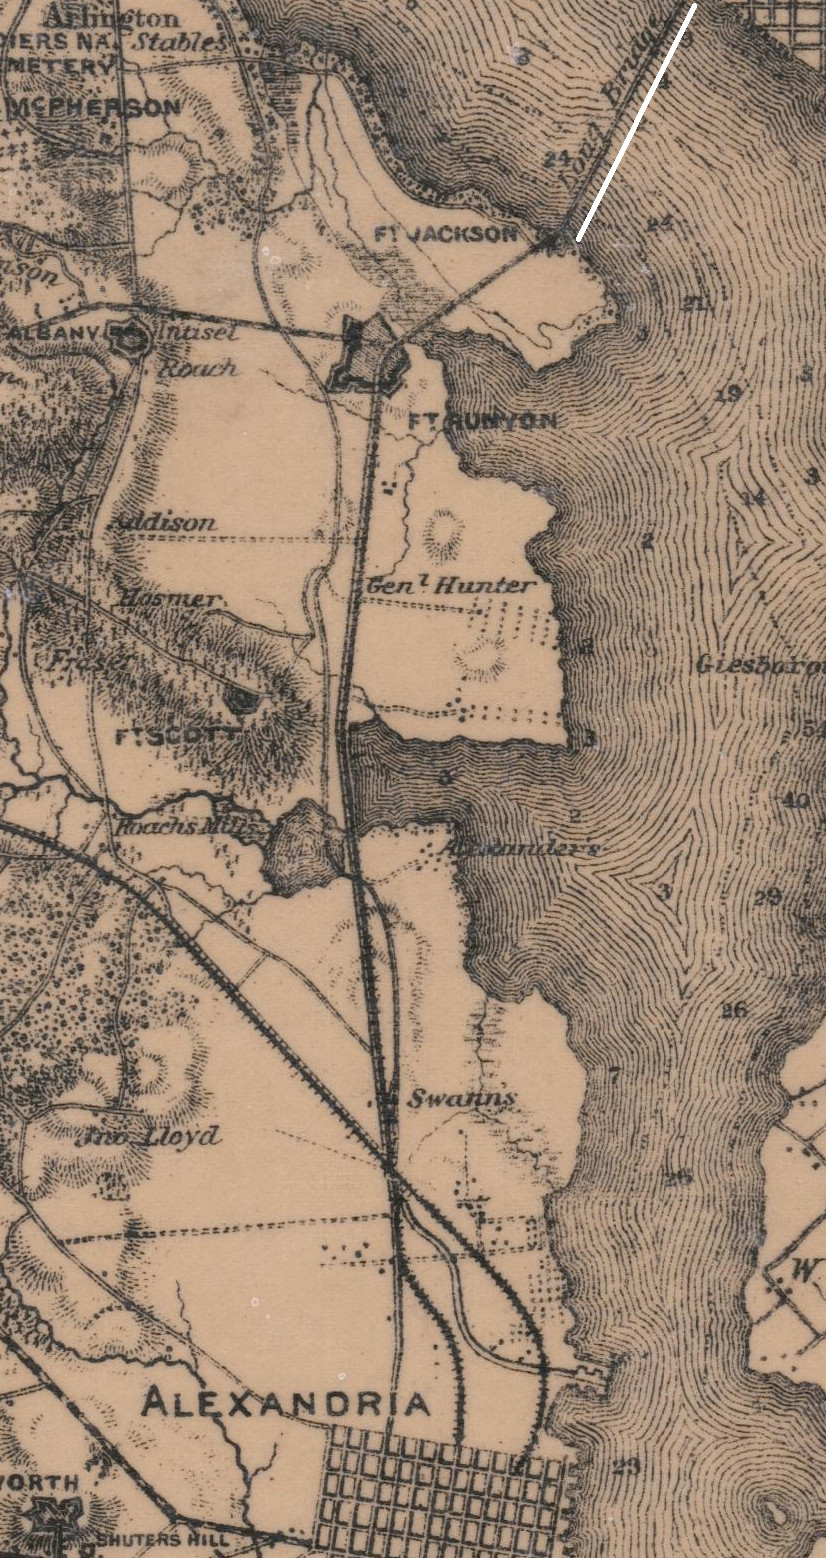 Union troops rebuilt the Alexandria and Washington Railroad up to Long Bridge